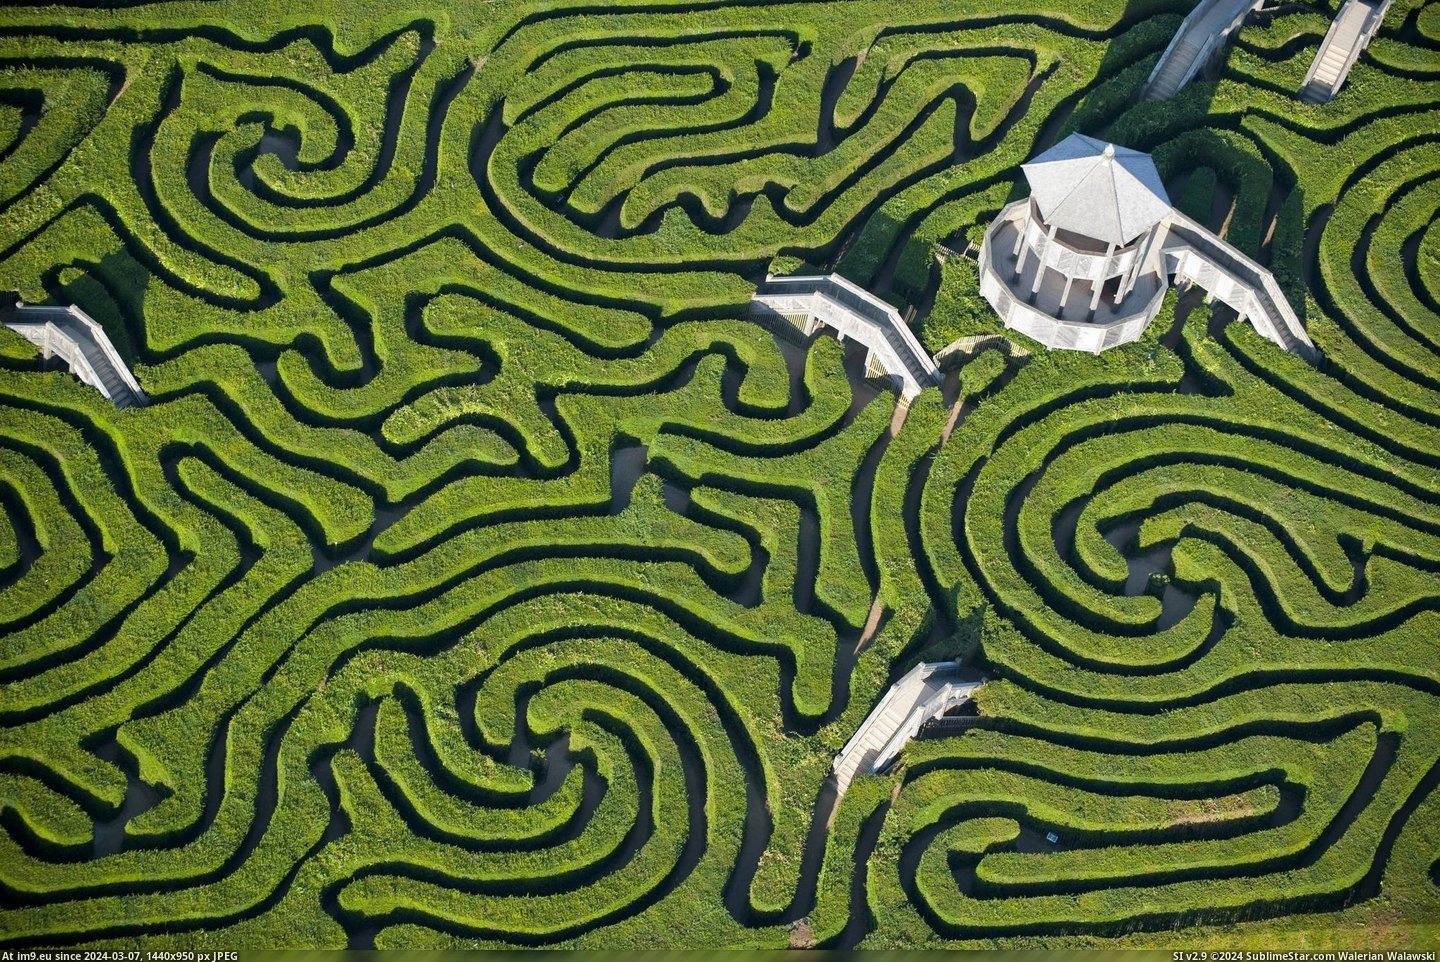 #England #Longleat #Maze [Pics] Maze at Longleat, England Pic. (Bild von album My r/PICS favs))